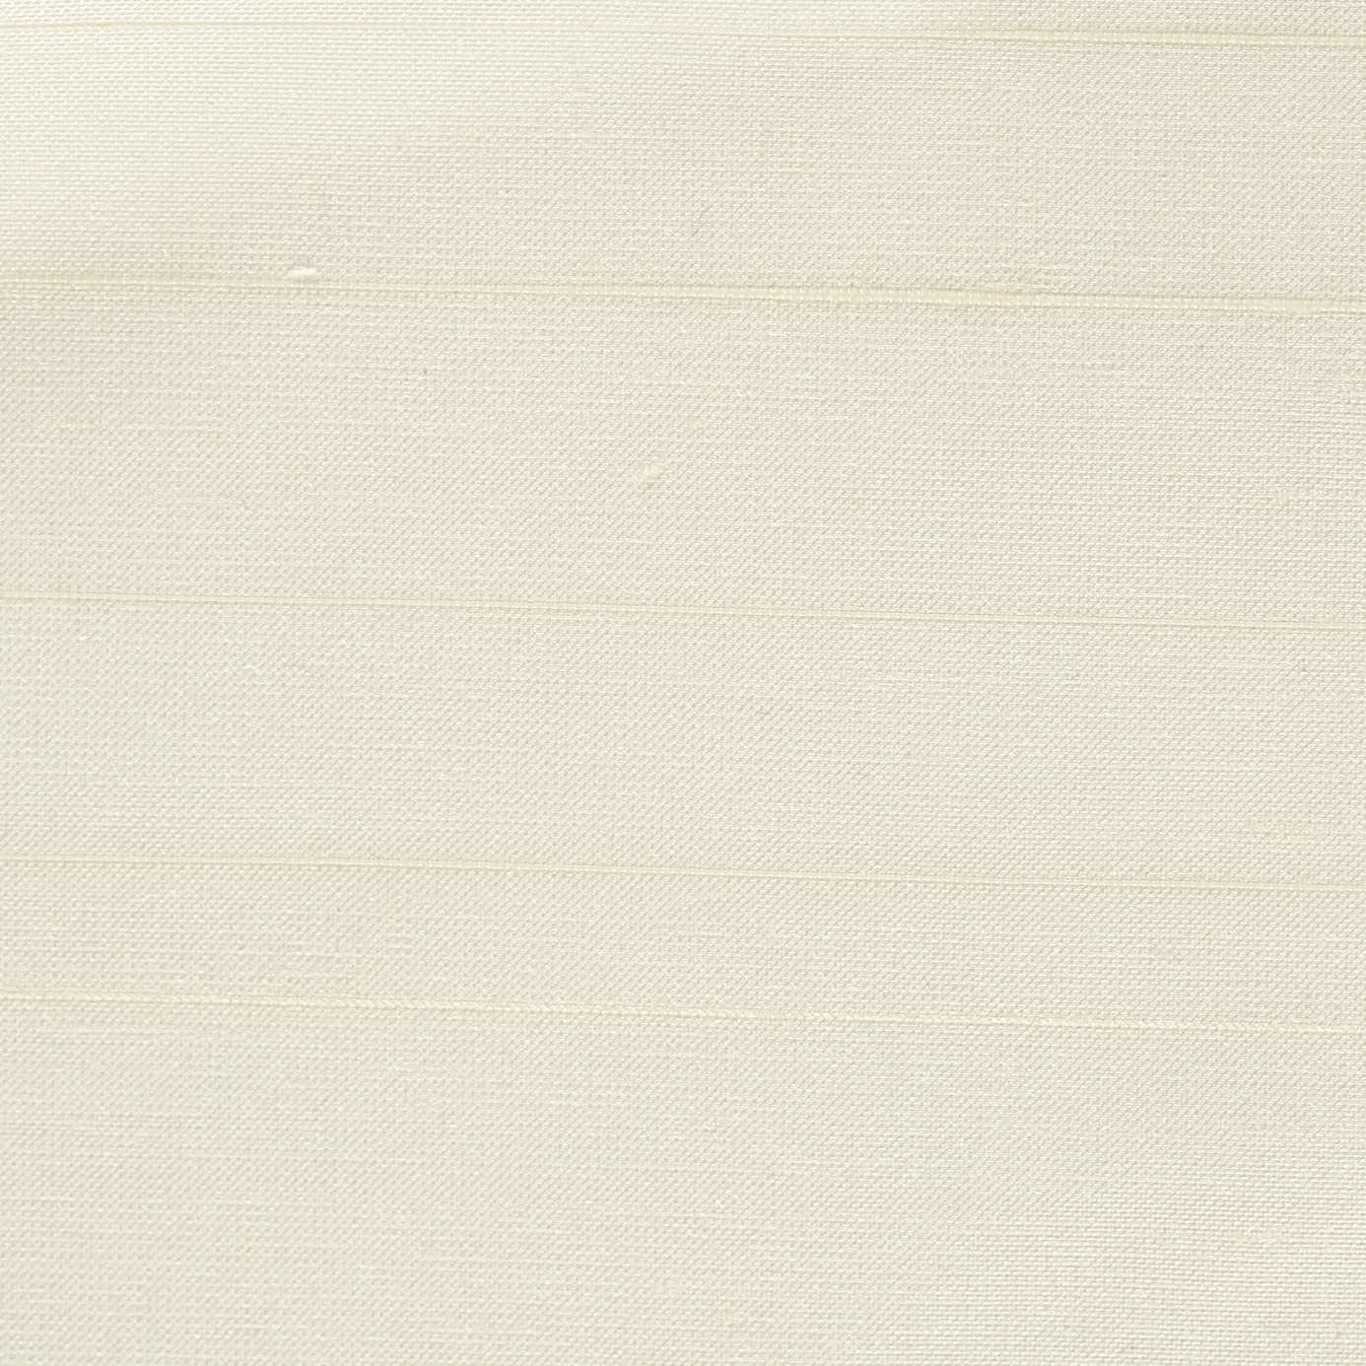 Deflect Fabric by Harlequin - HPOL440652 - Ricepaper